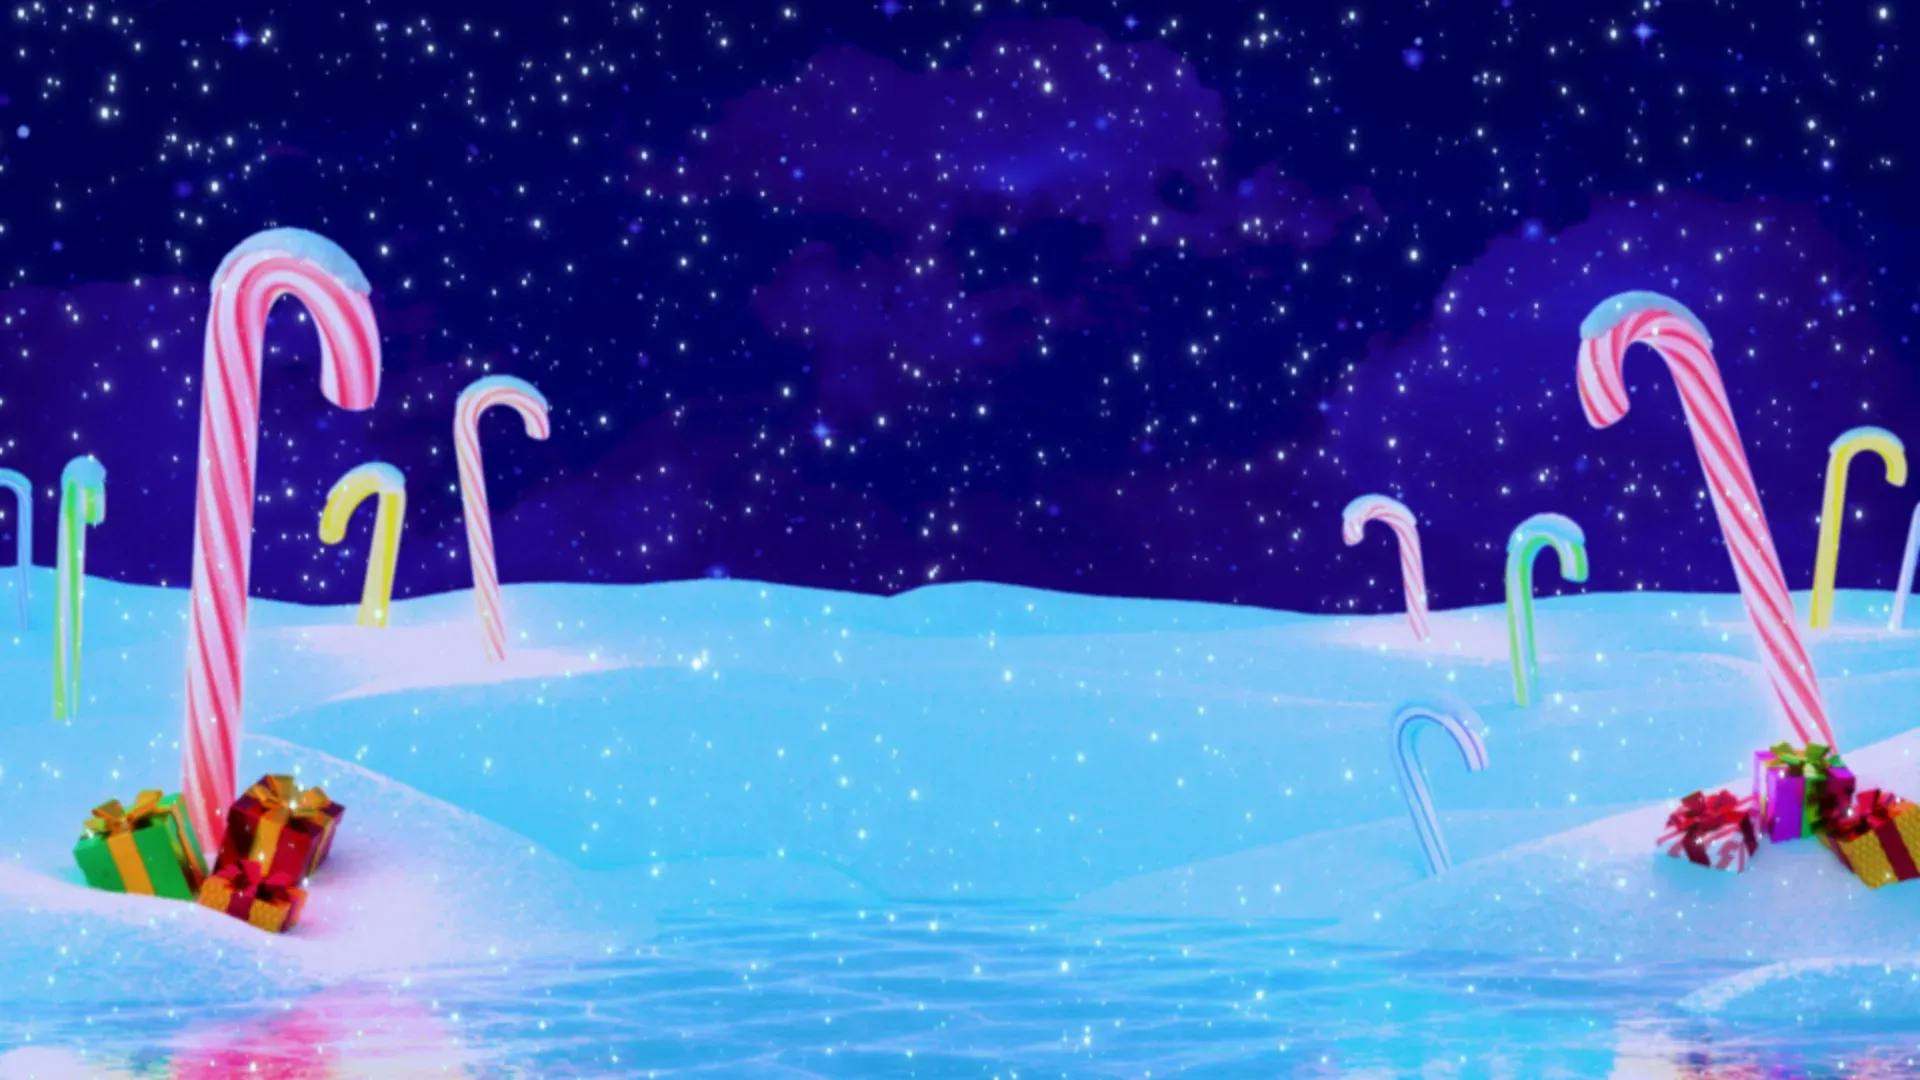 3D winter wonderland environment created for DreamWorks TV Christmas event in 2022.